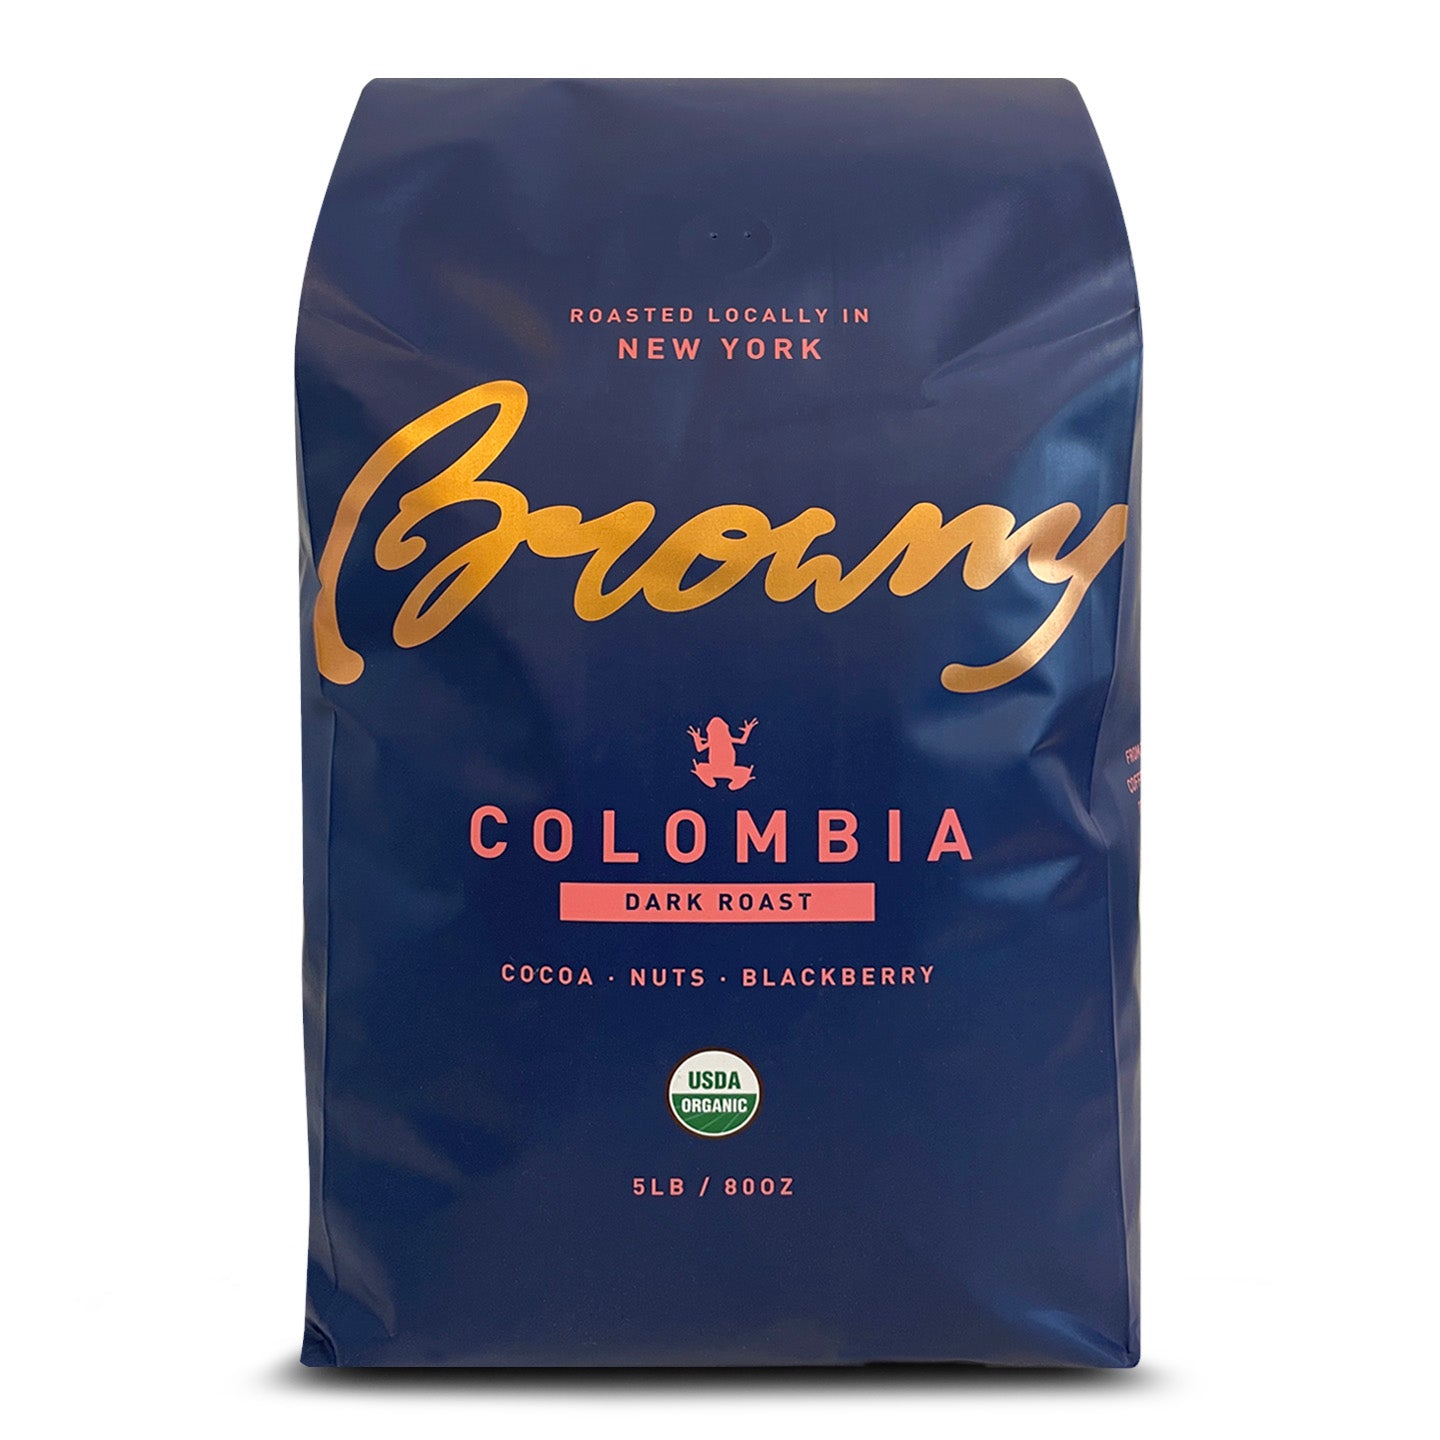 COLOMBIA, Dark Roast